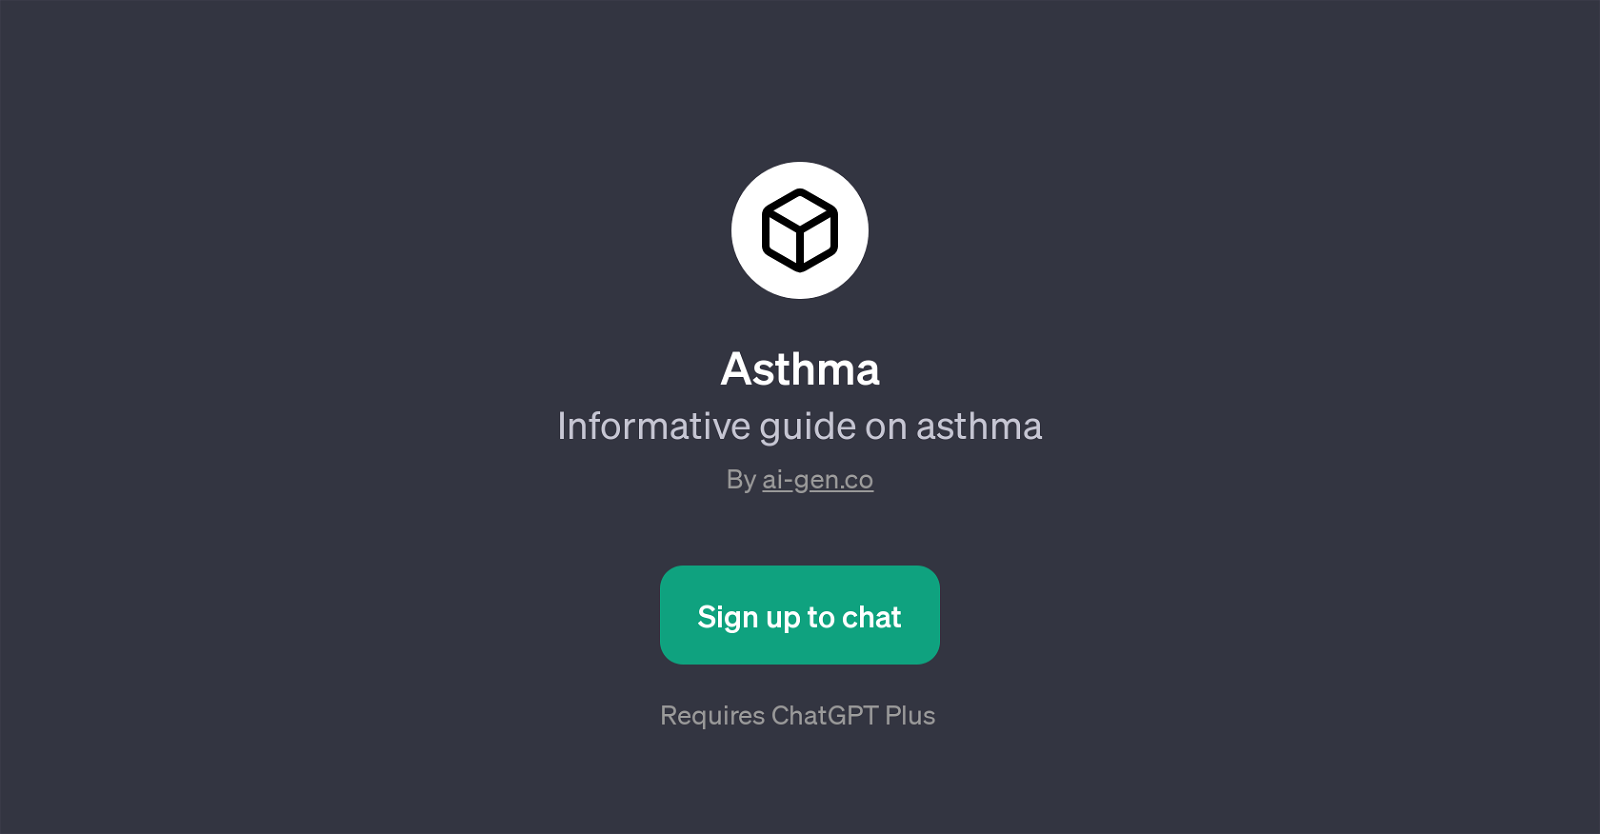 AsthmaPage website